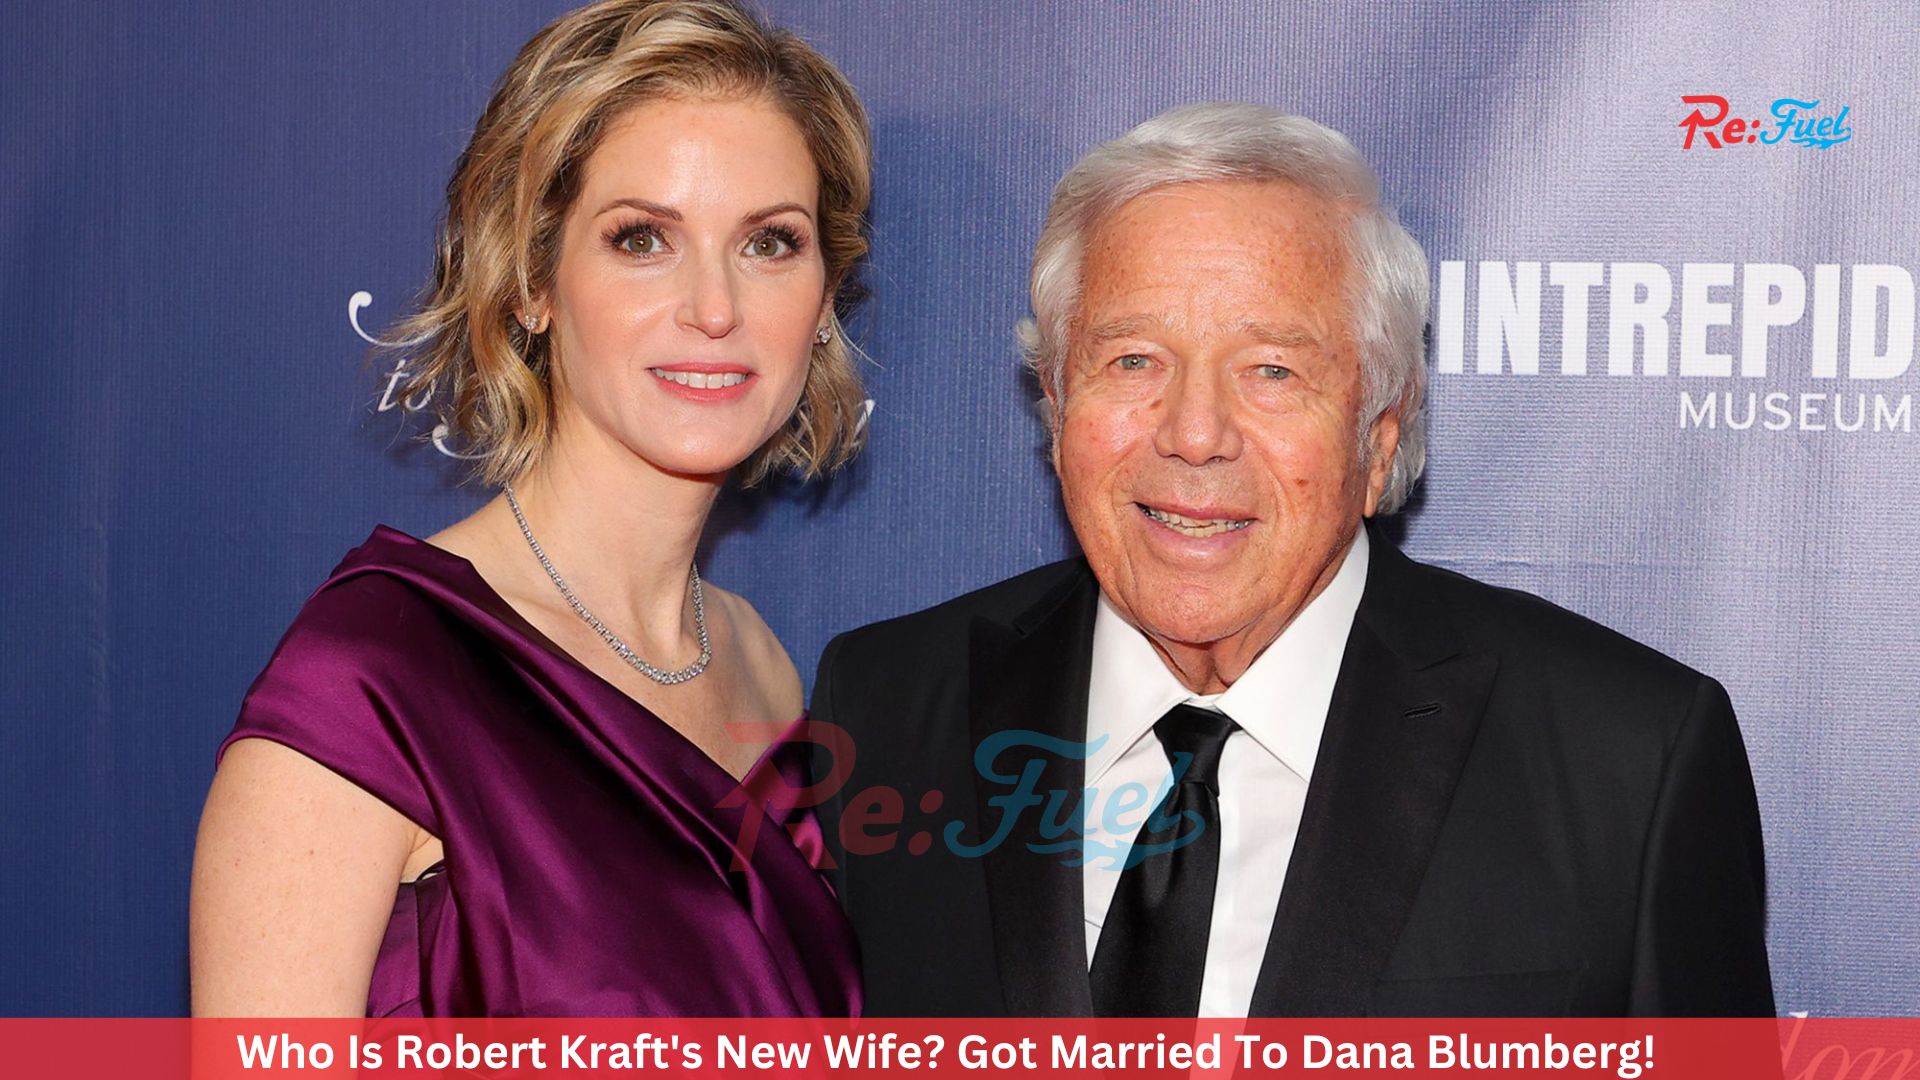 Who Is Robert Kraft's New Wife? Got Married To Dana Blumberg!